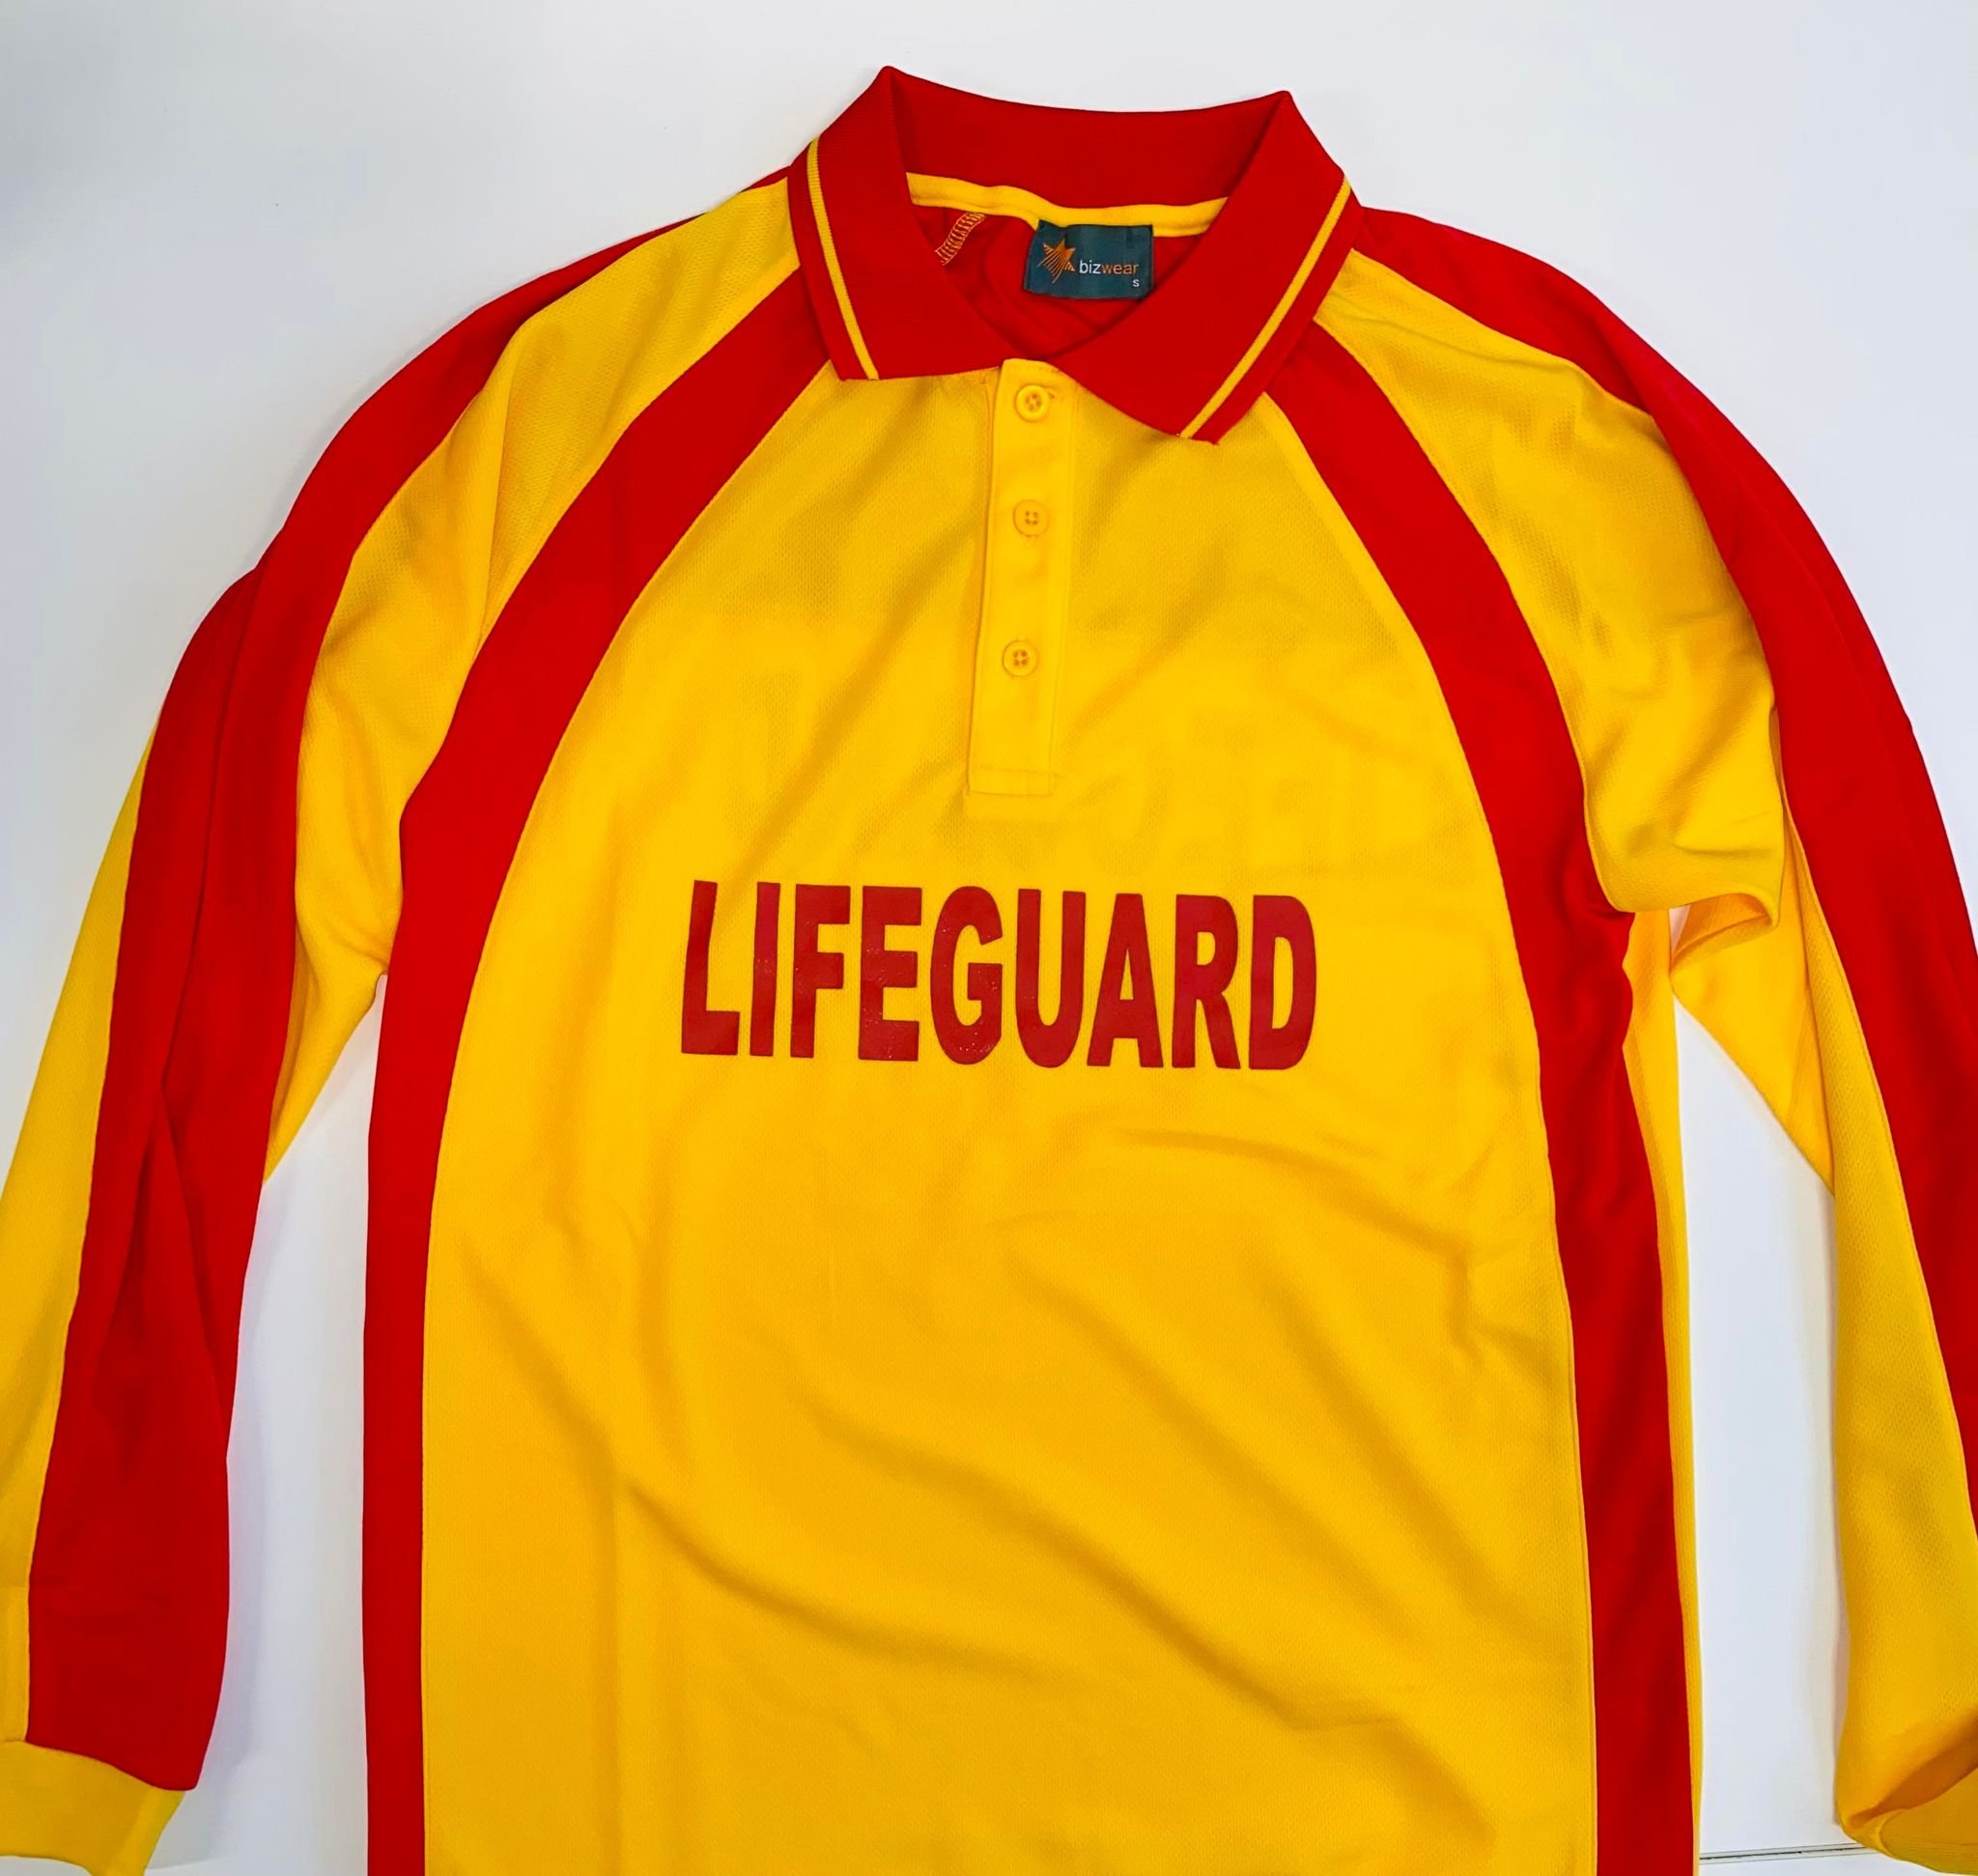 Lifeguard - Polo shirt - $30.00